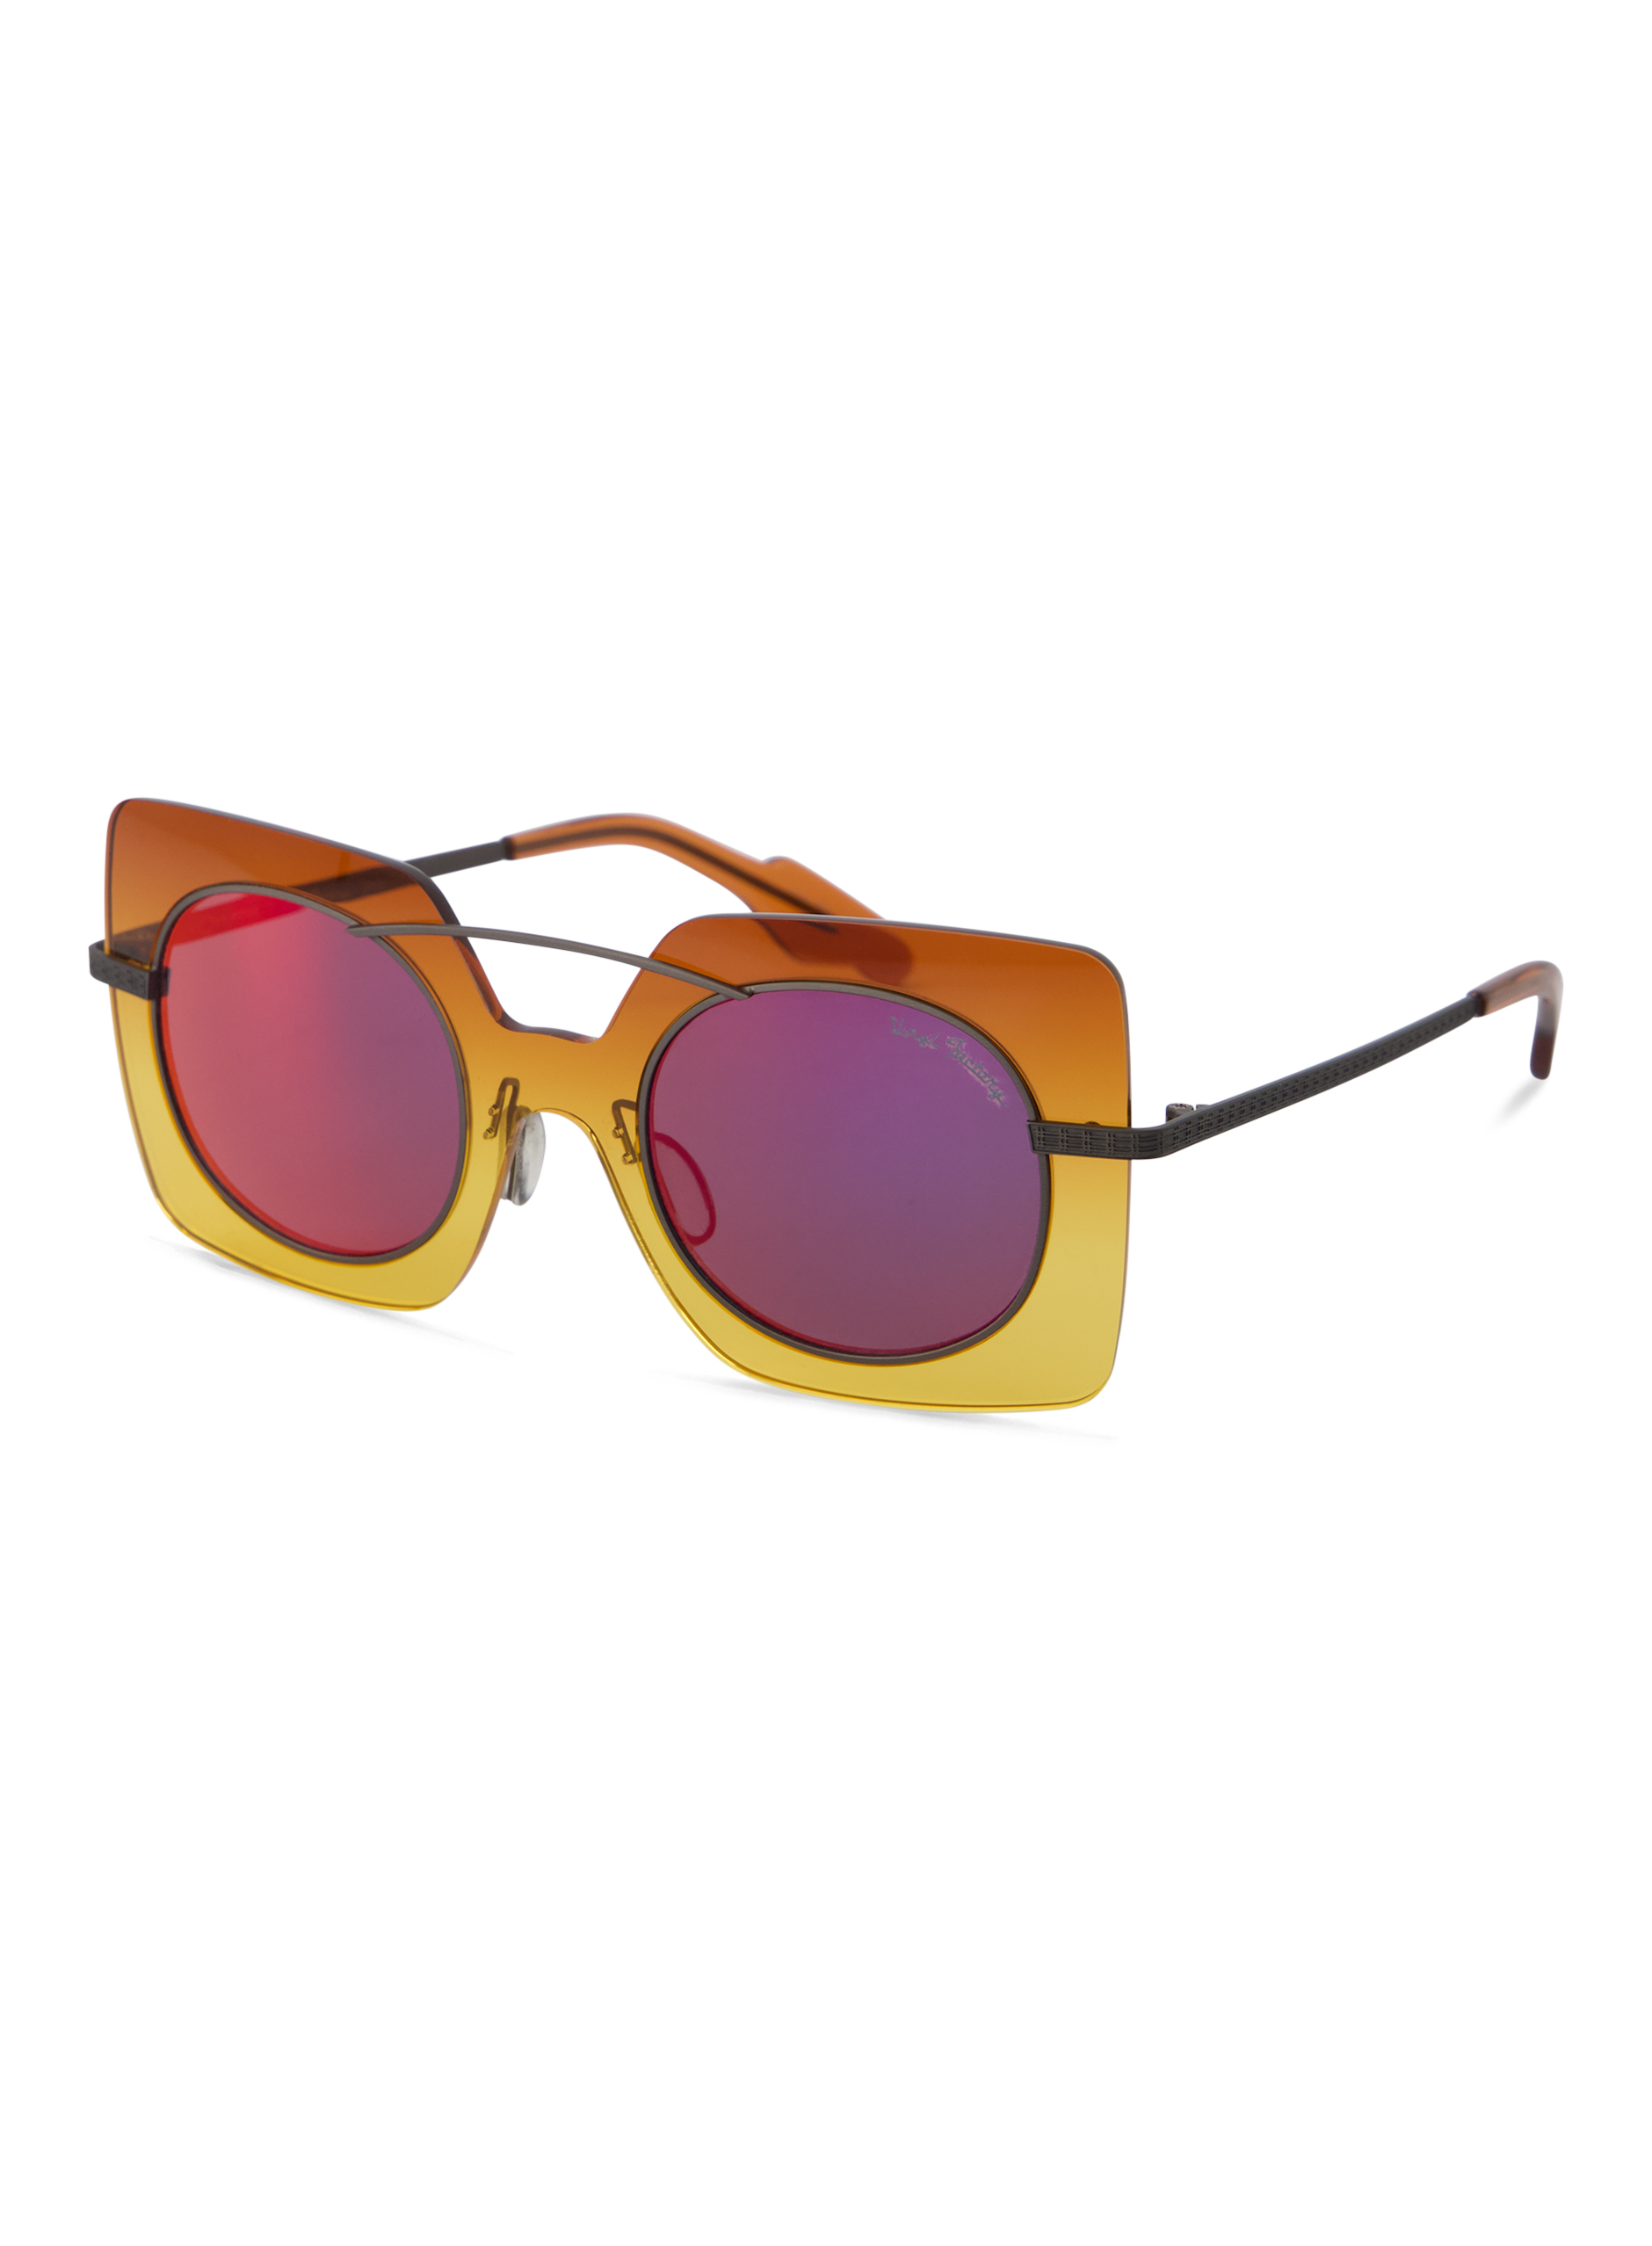 Germanotta sunglasses